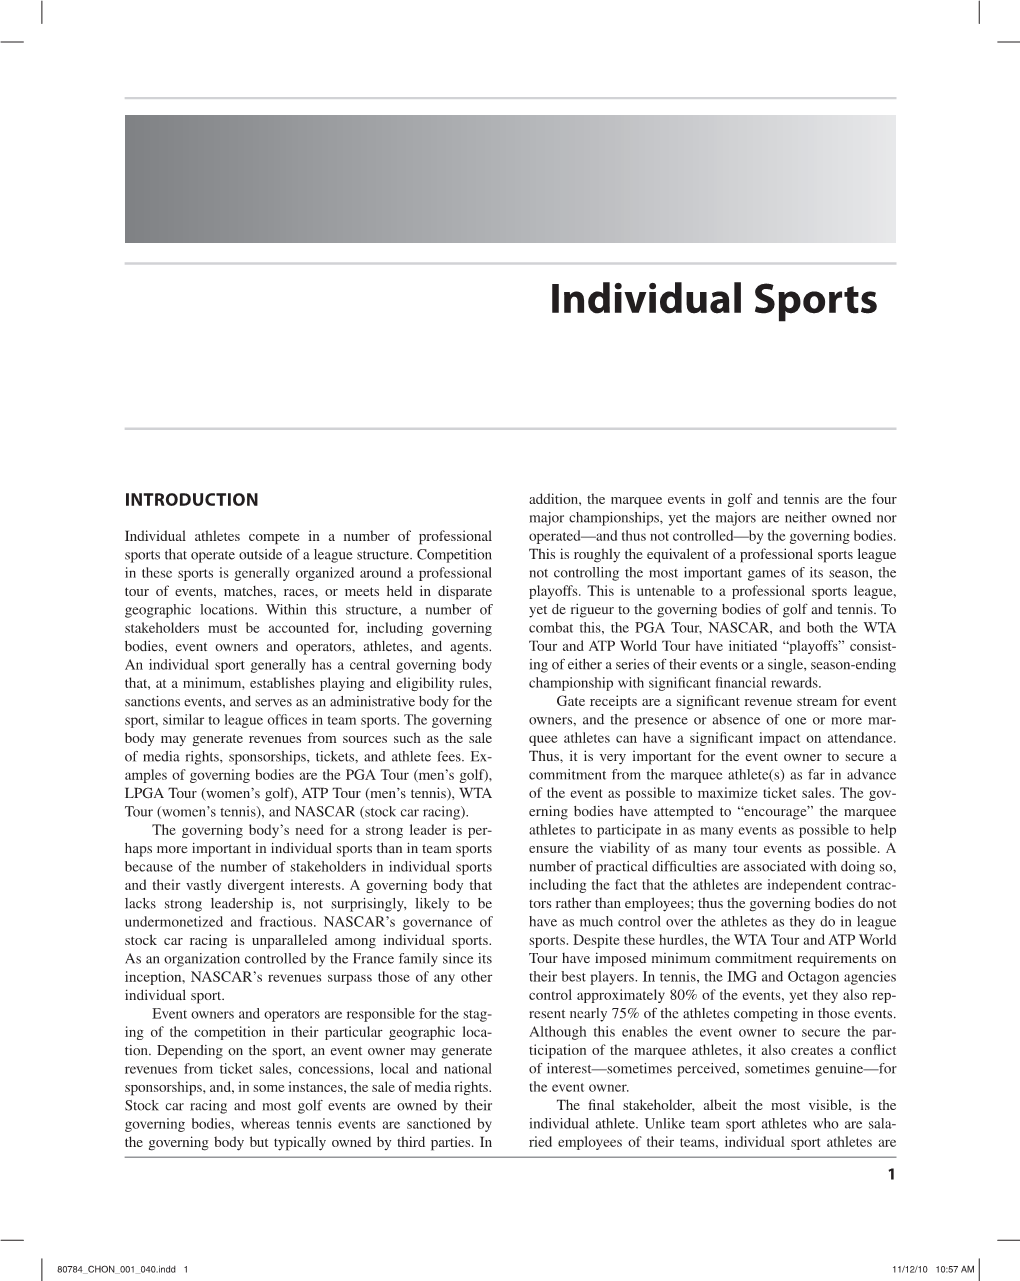 Individual Sports